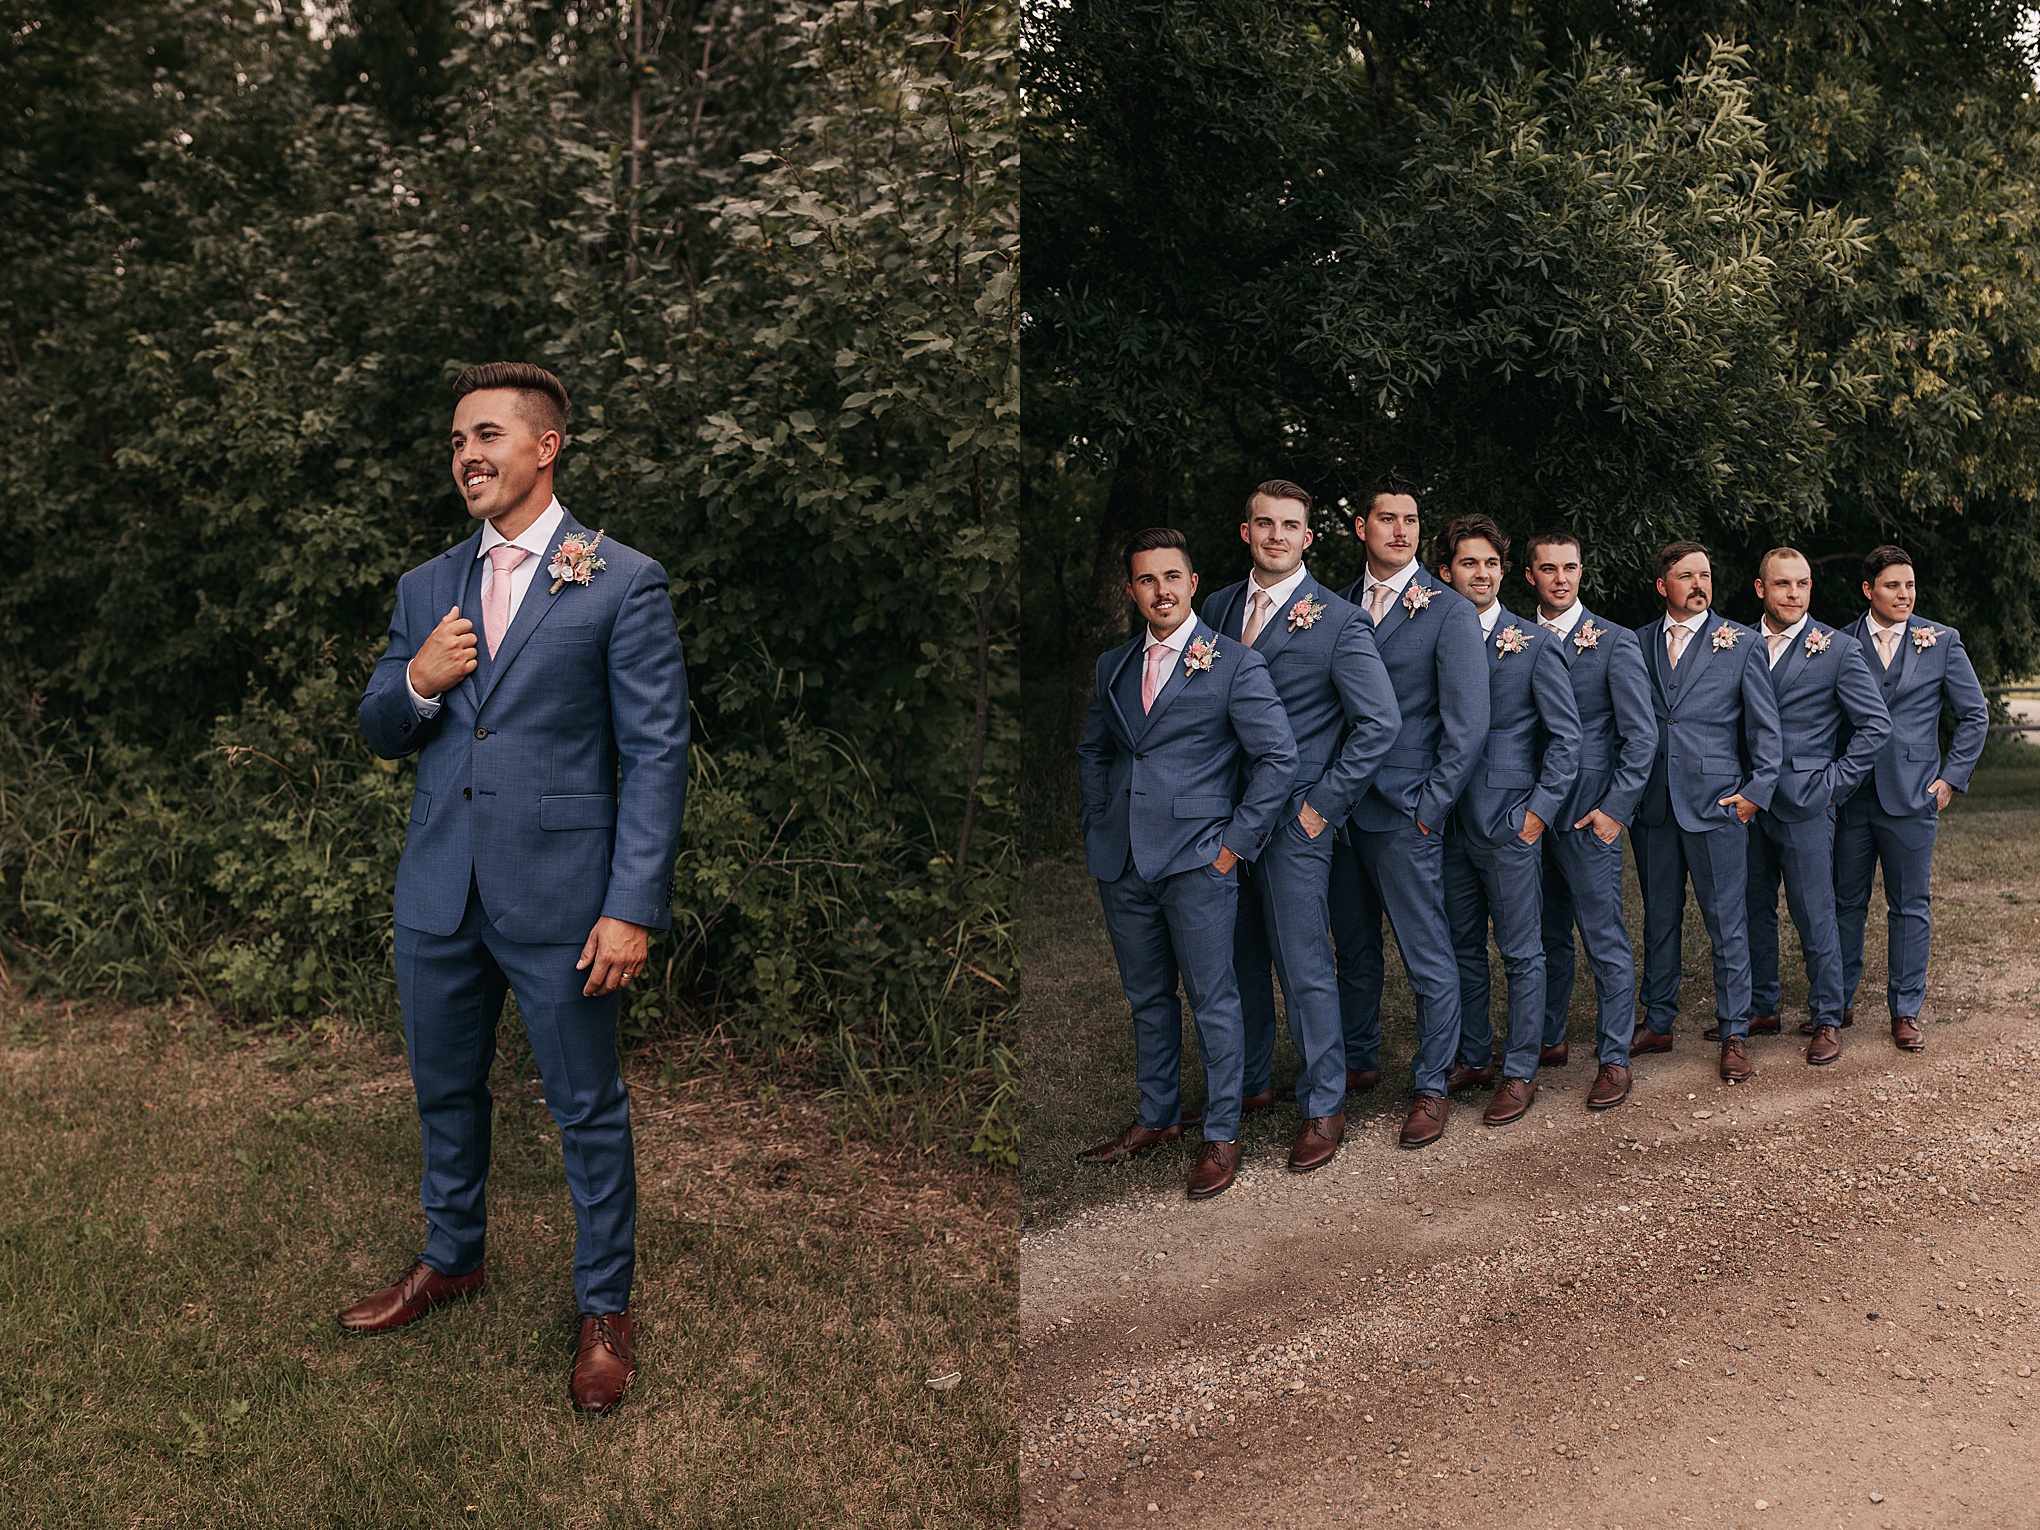 Moores navy suit wedding ideas photo